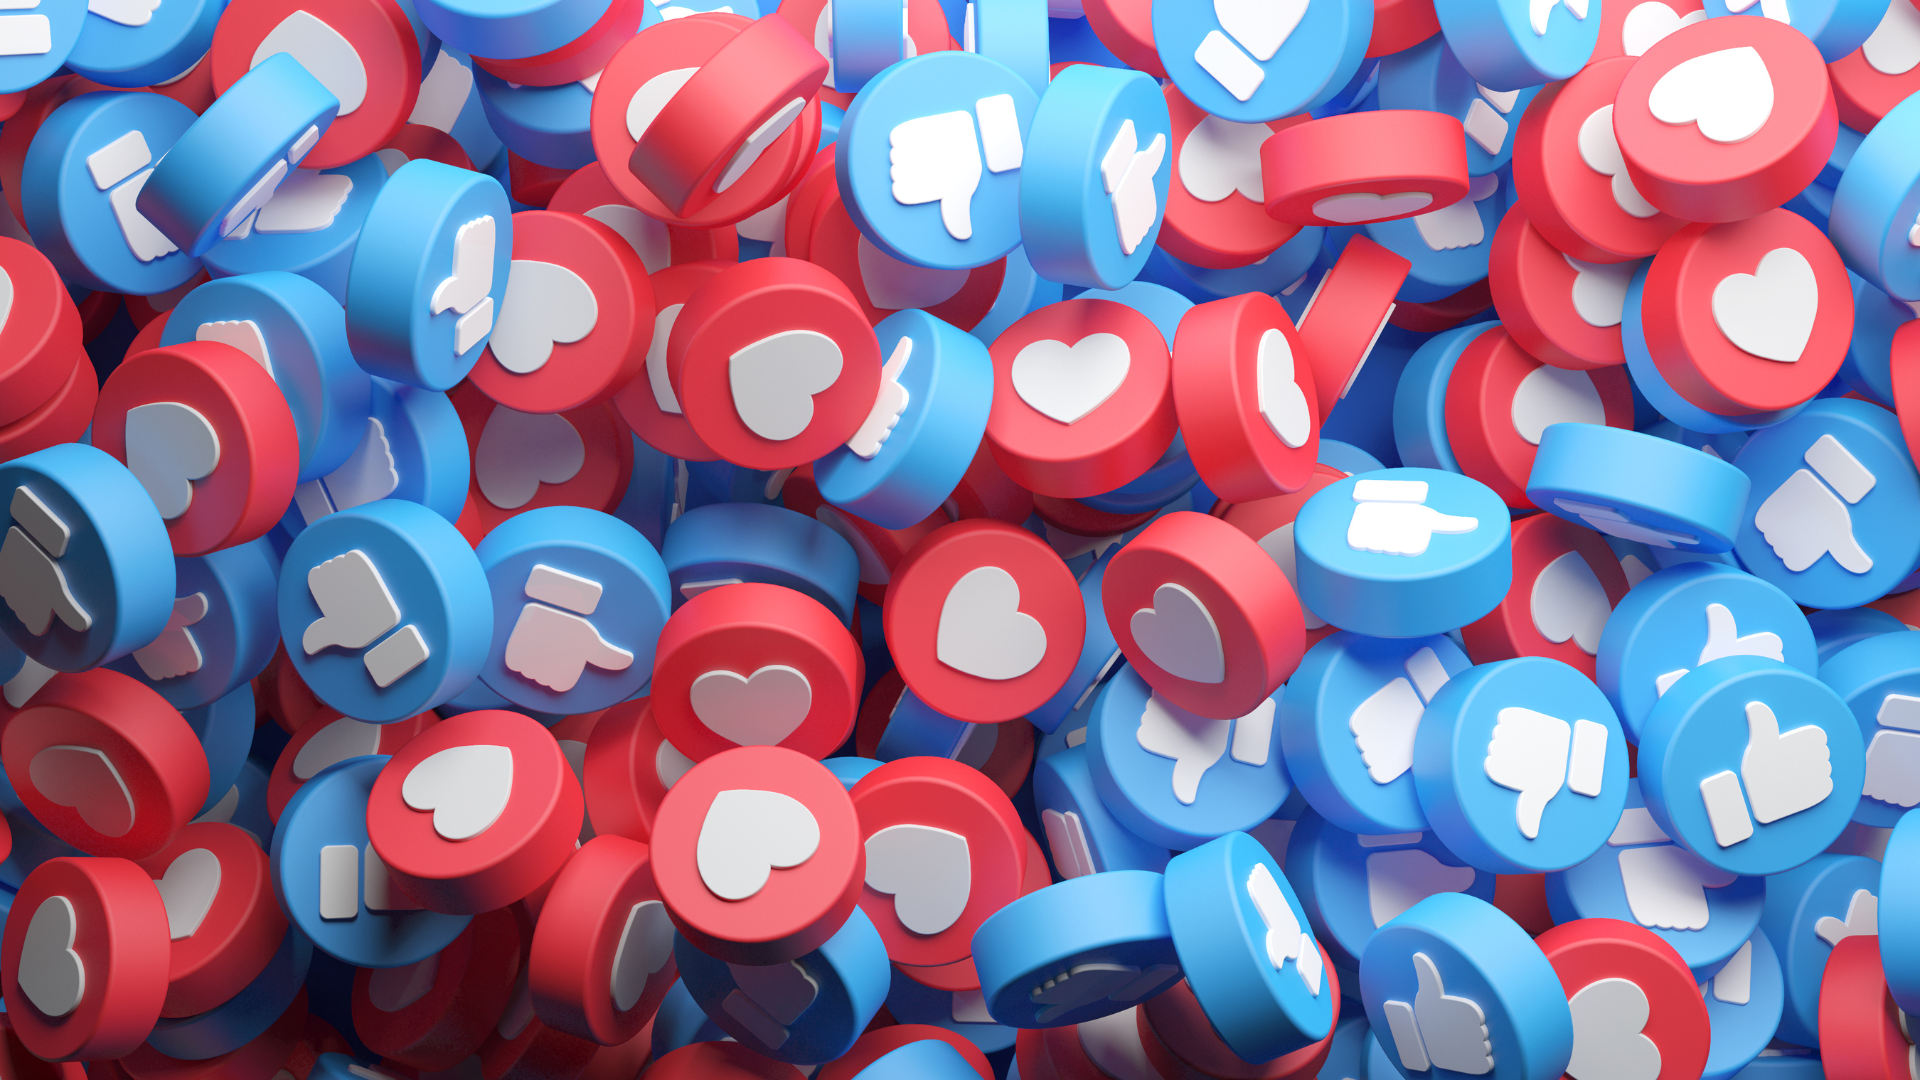 Social media Likes and Love reaction emojis in circles